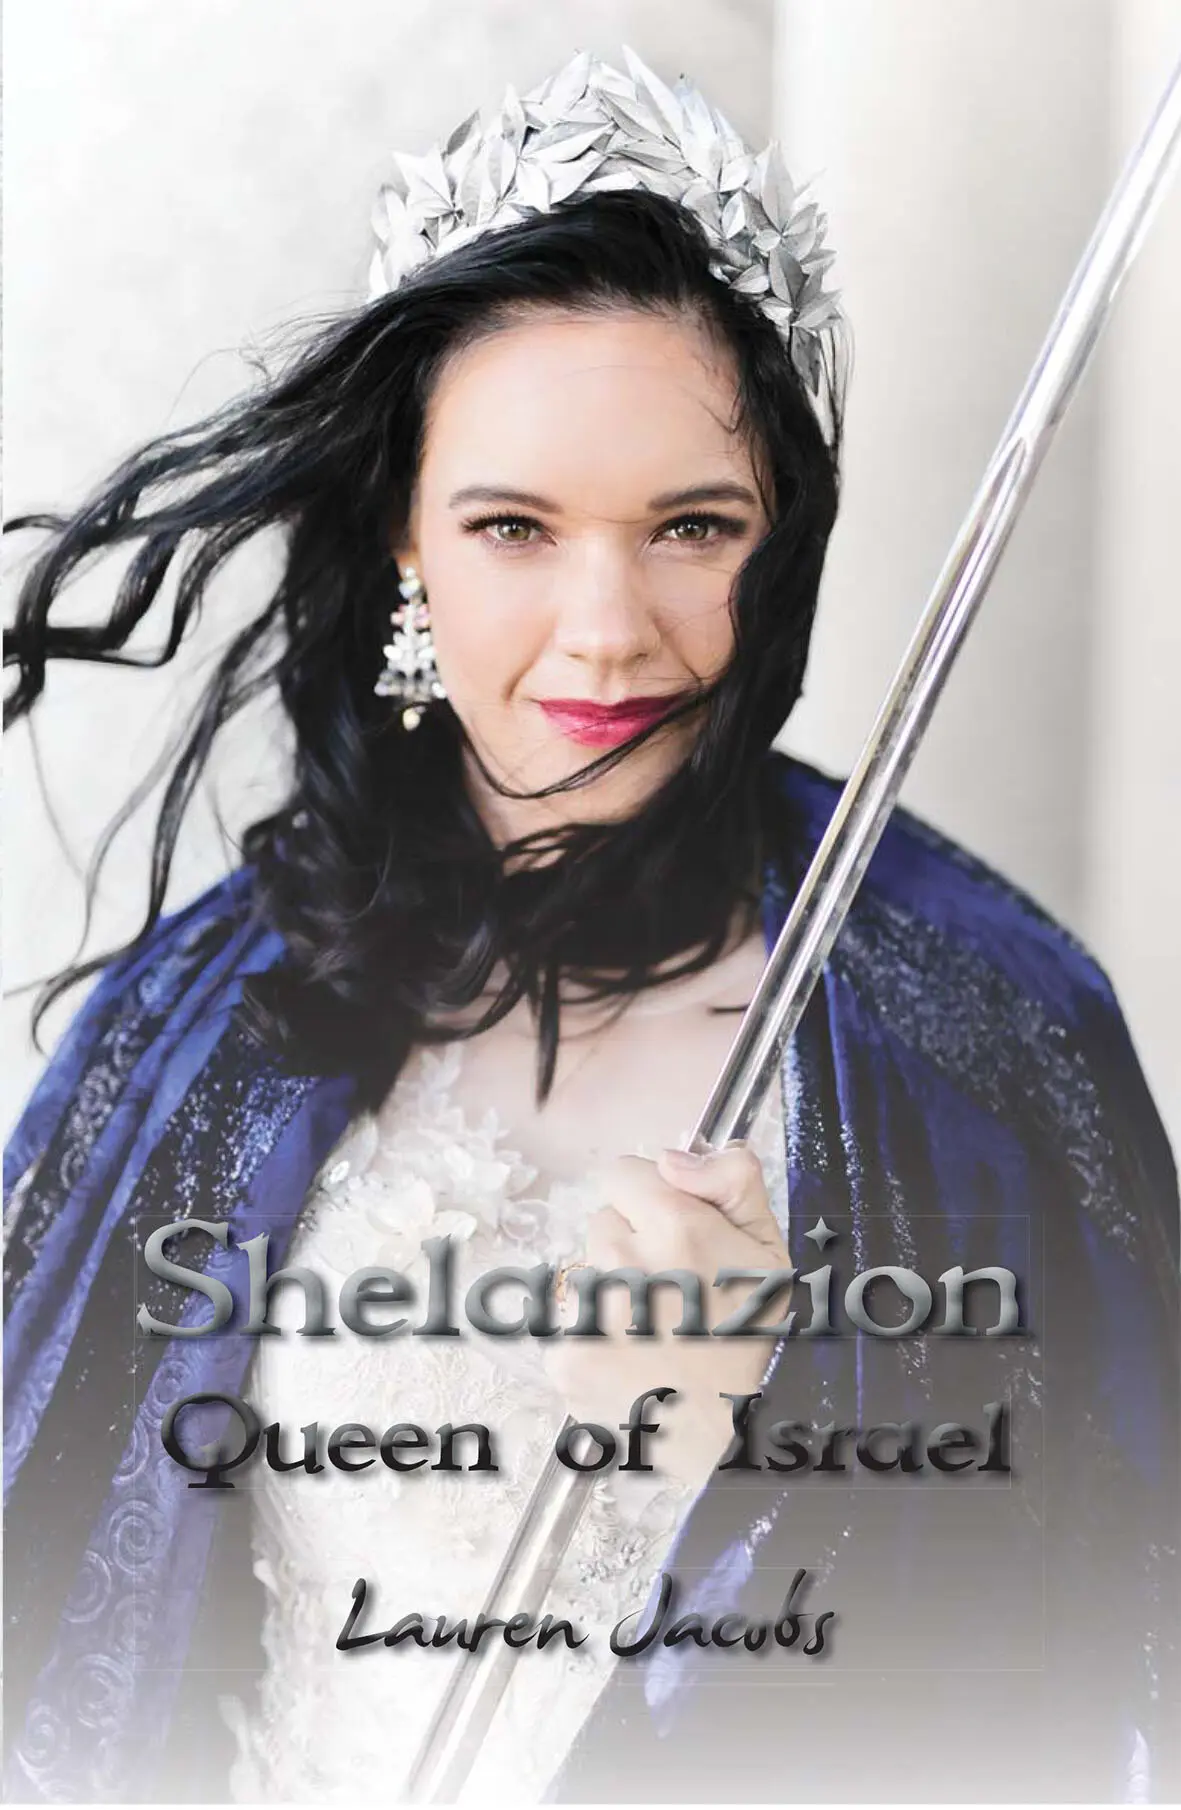 Shelamzion Queen of Israel